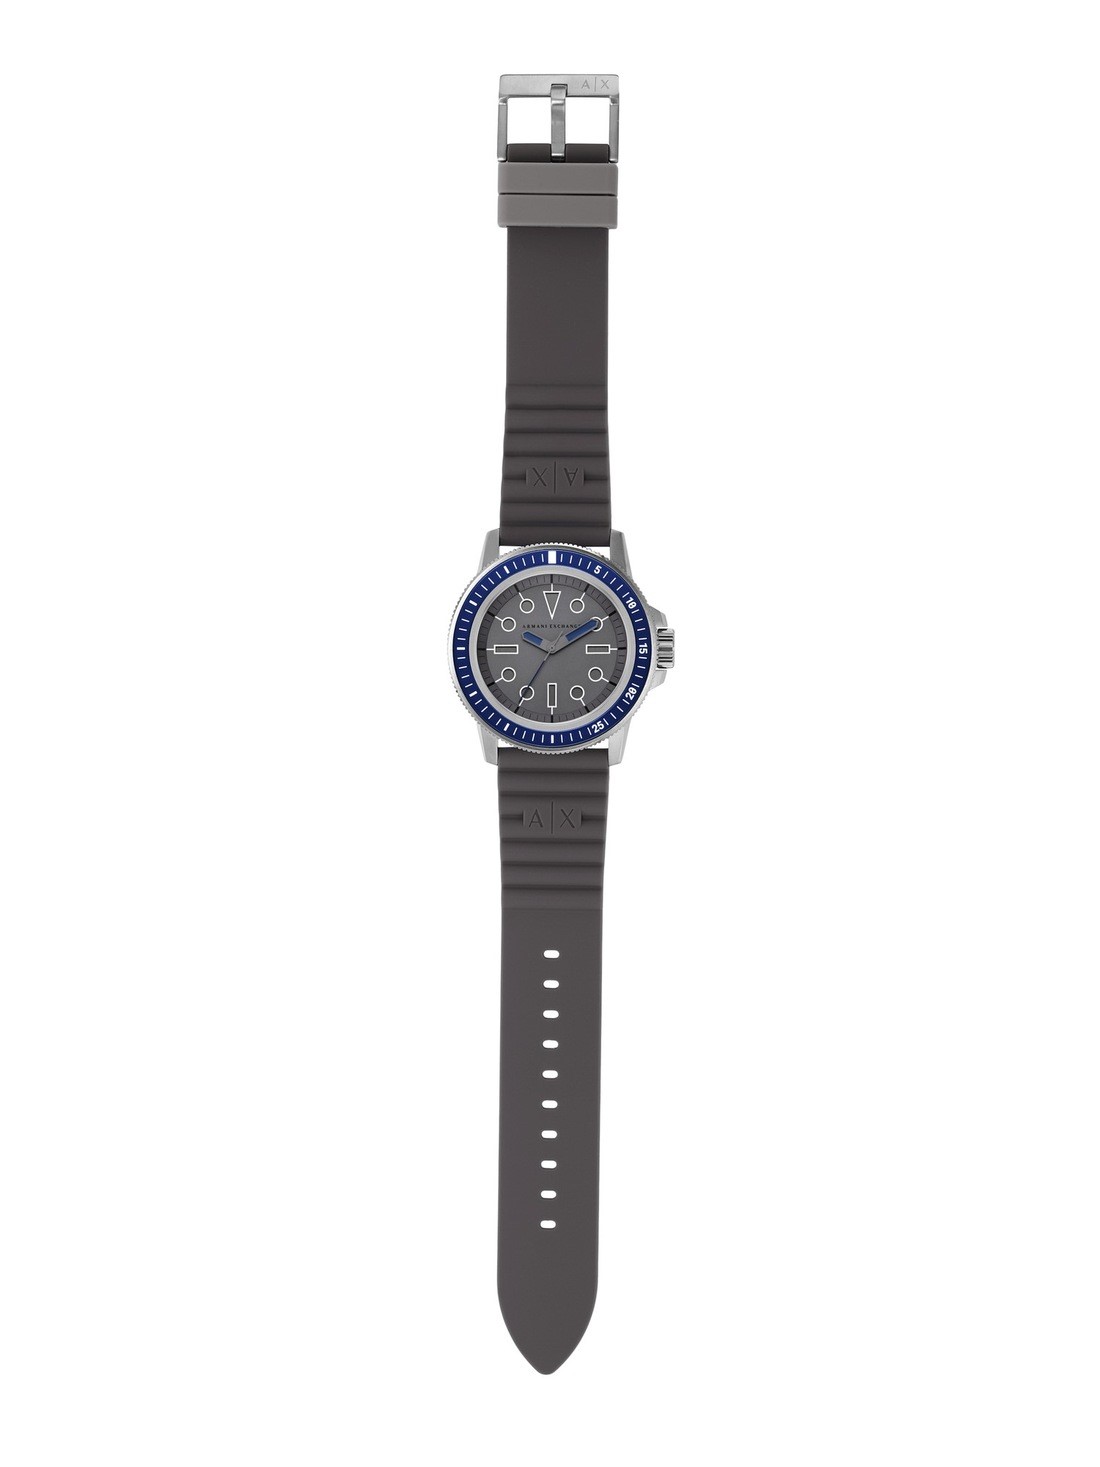 Armani Exchange Grey Watch AX1862 - Watch Station India